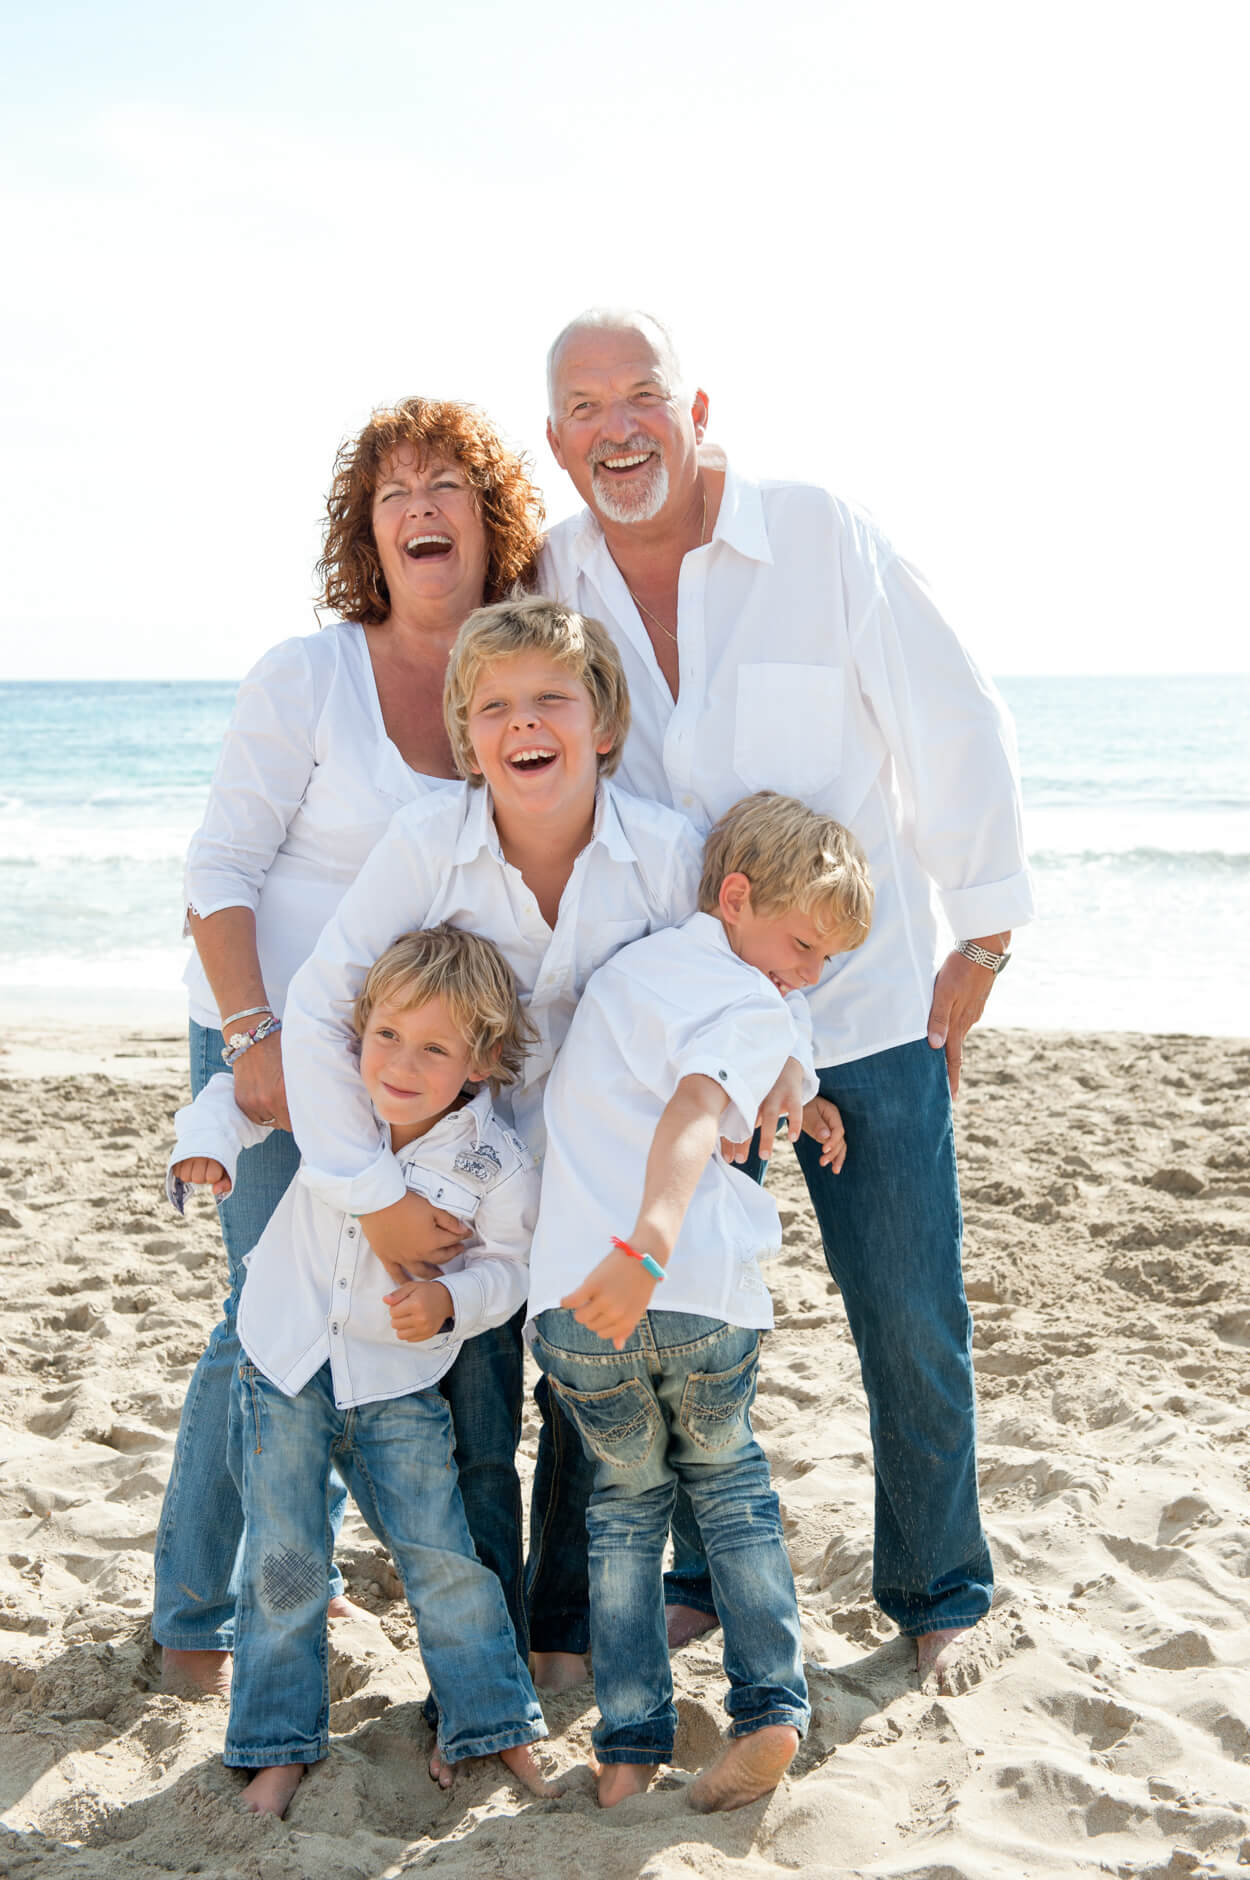 beach portrait grandparents kids white shirts jeans laughing morning light